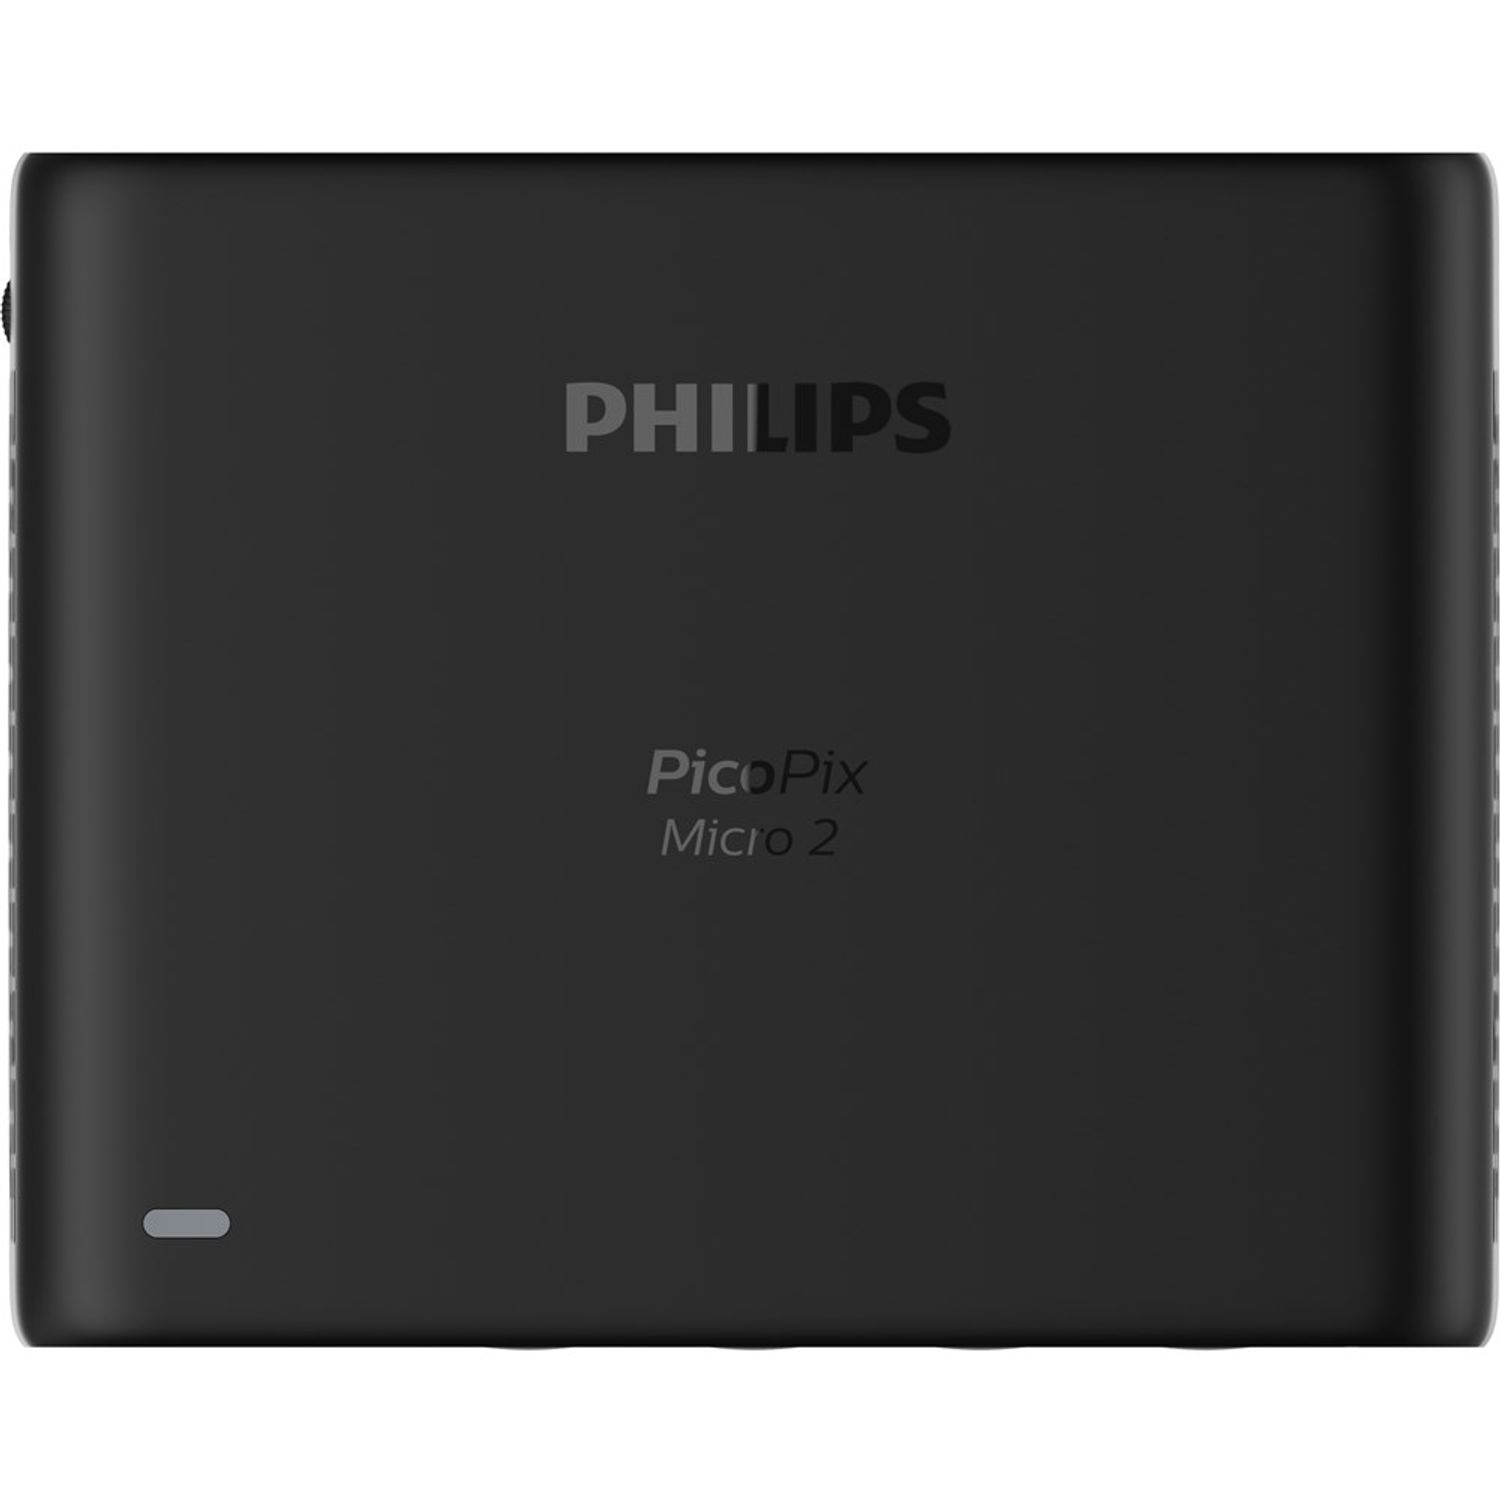 2 PicoPix Micro PHILIPS Beamer(VGA)